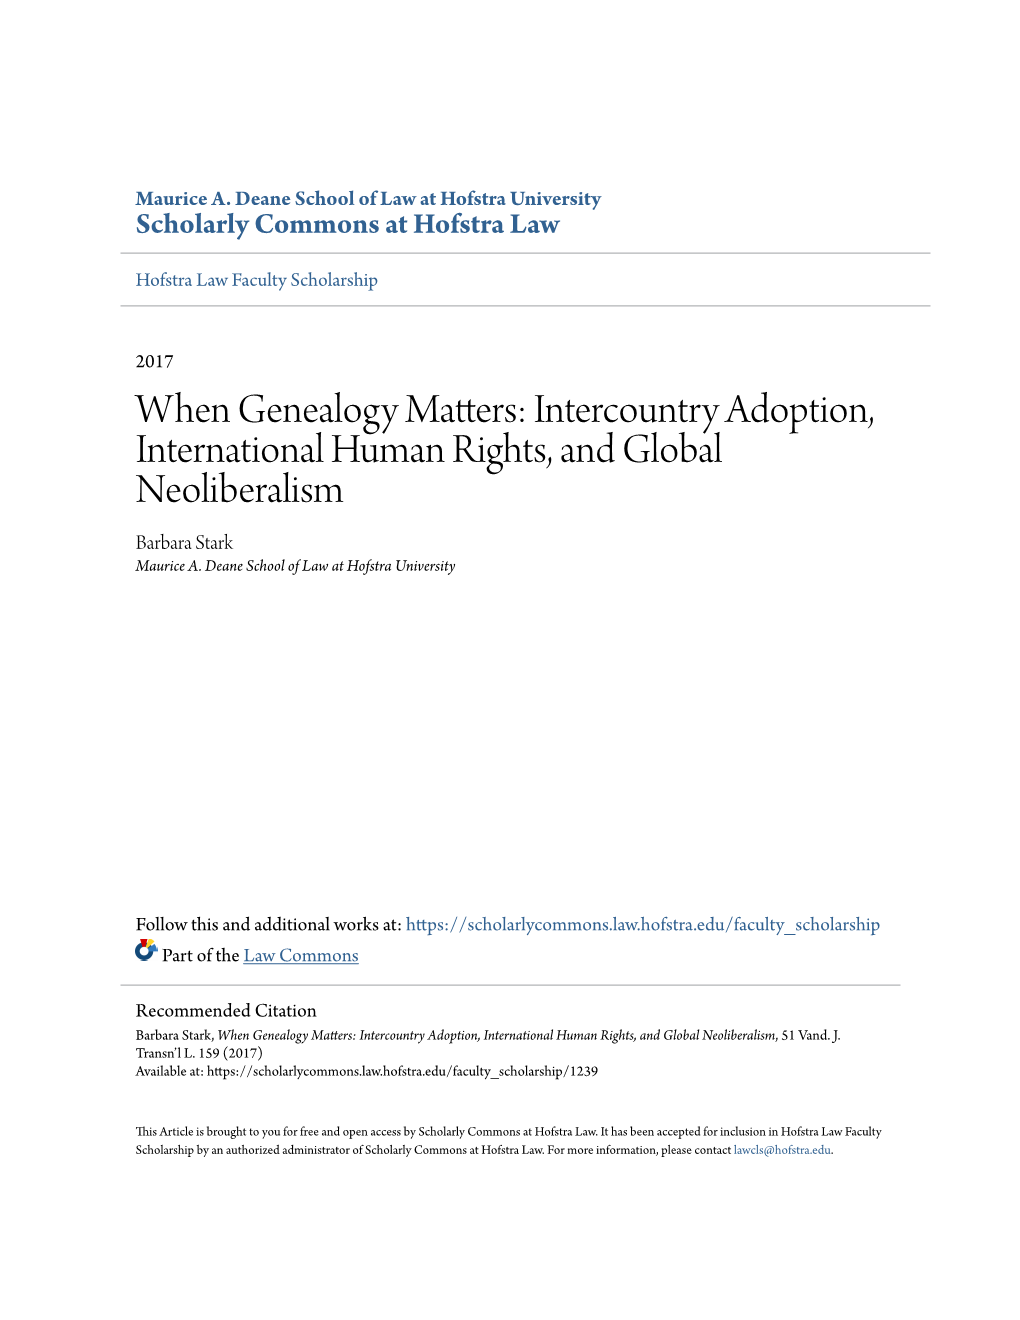 Intercountry Adoption, International Human Rights, and Global Neoliberalism Barbara Stark Maurice A